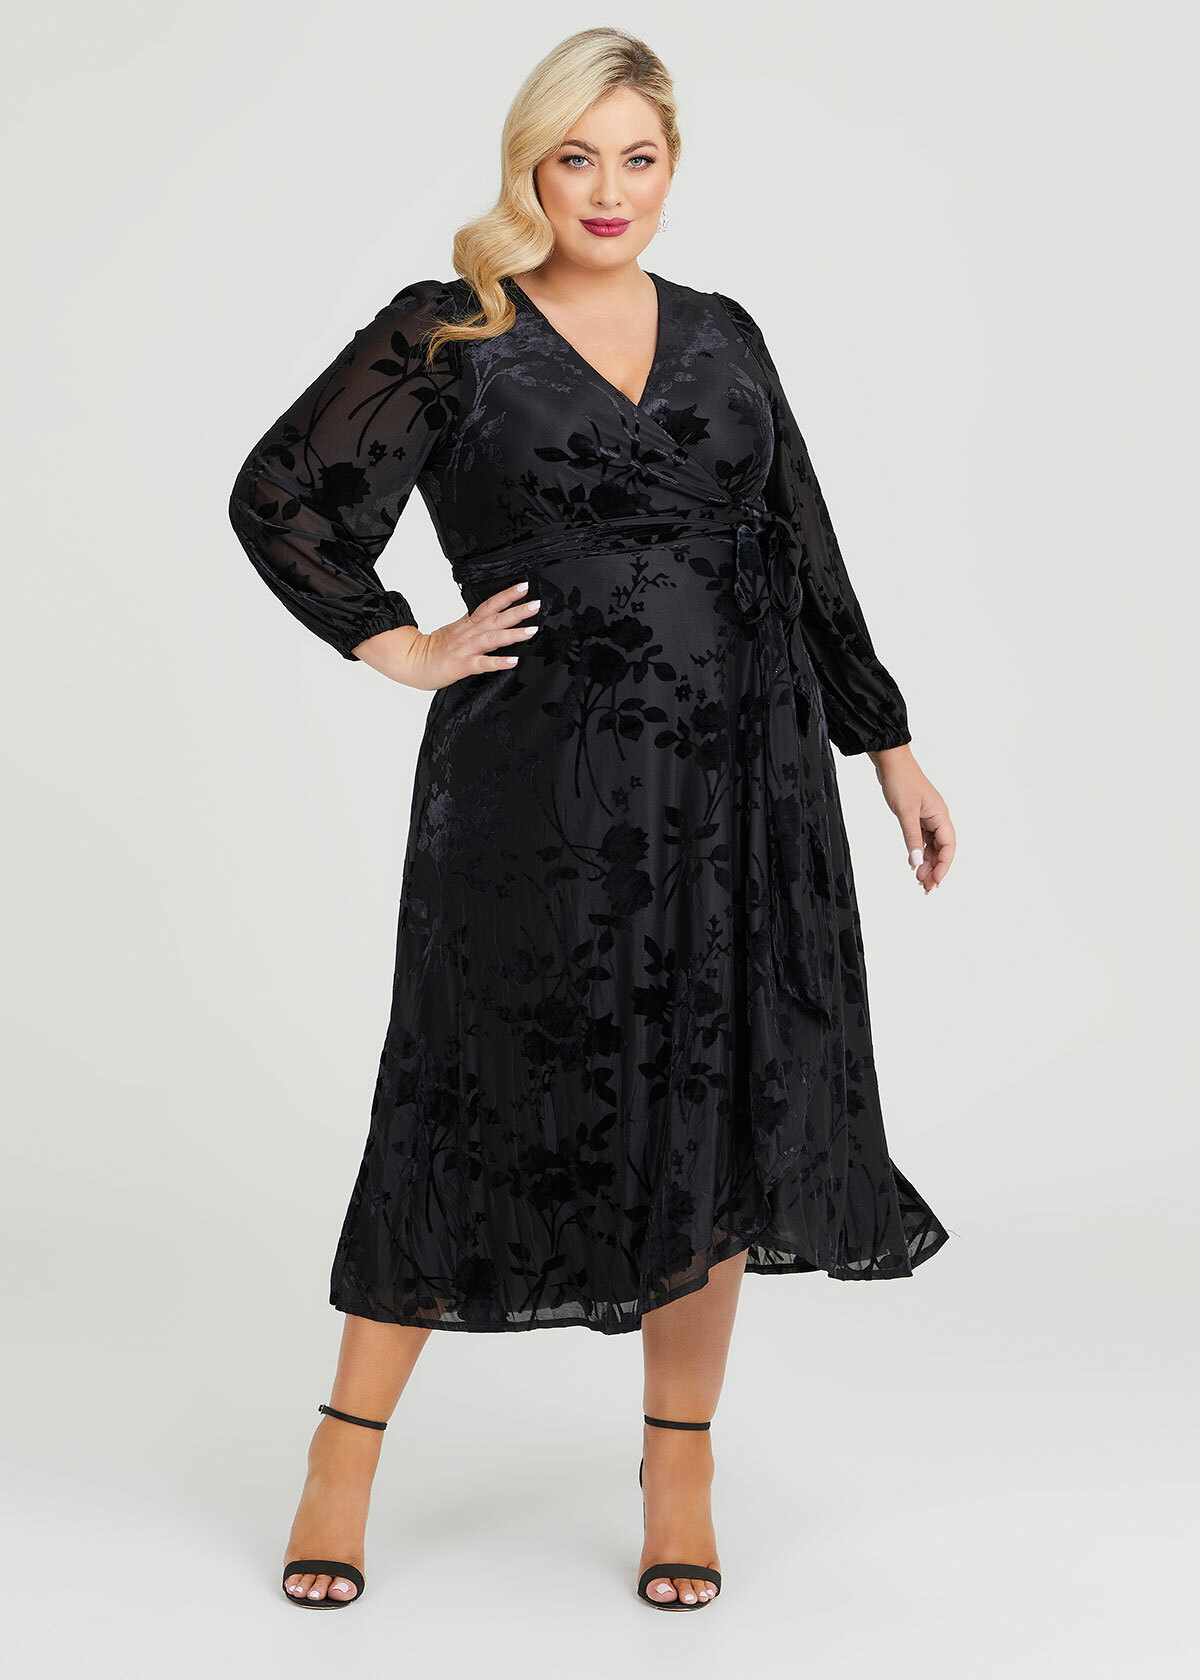 Shop Plus Size Devore Velvet Formal Dress in Black | Sizes 12-30 ...